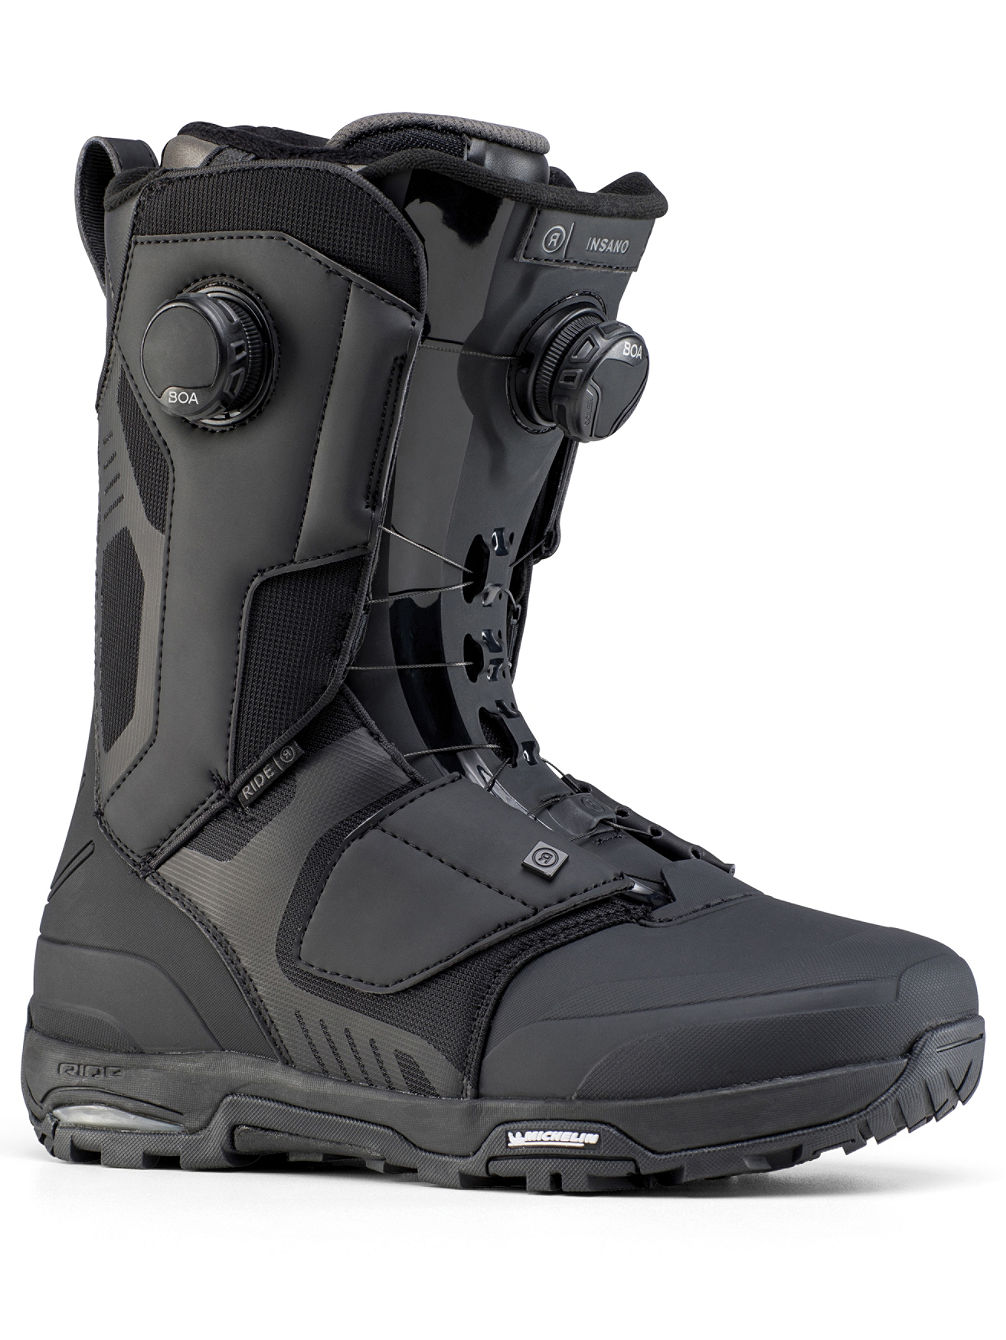 Insano Snowboard Boots